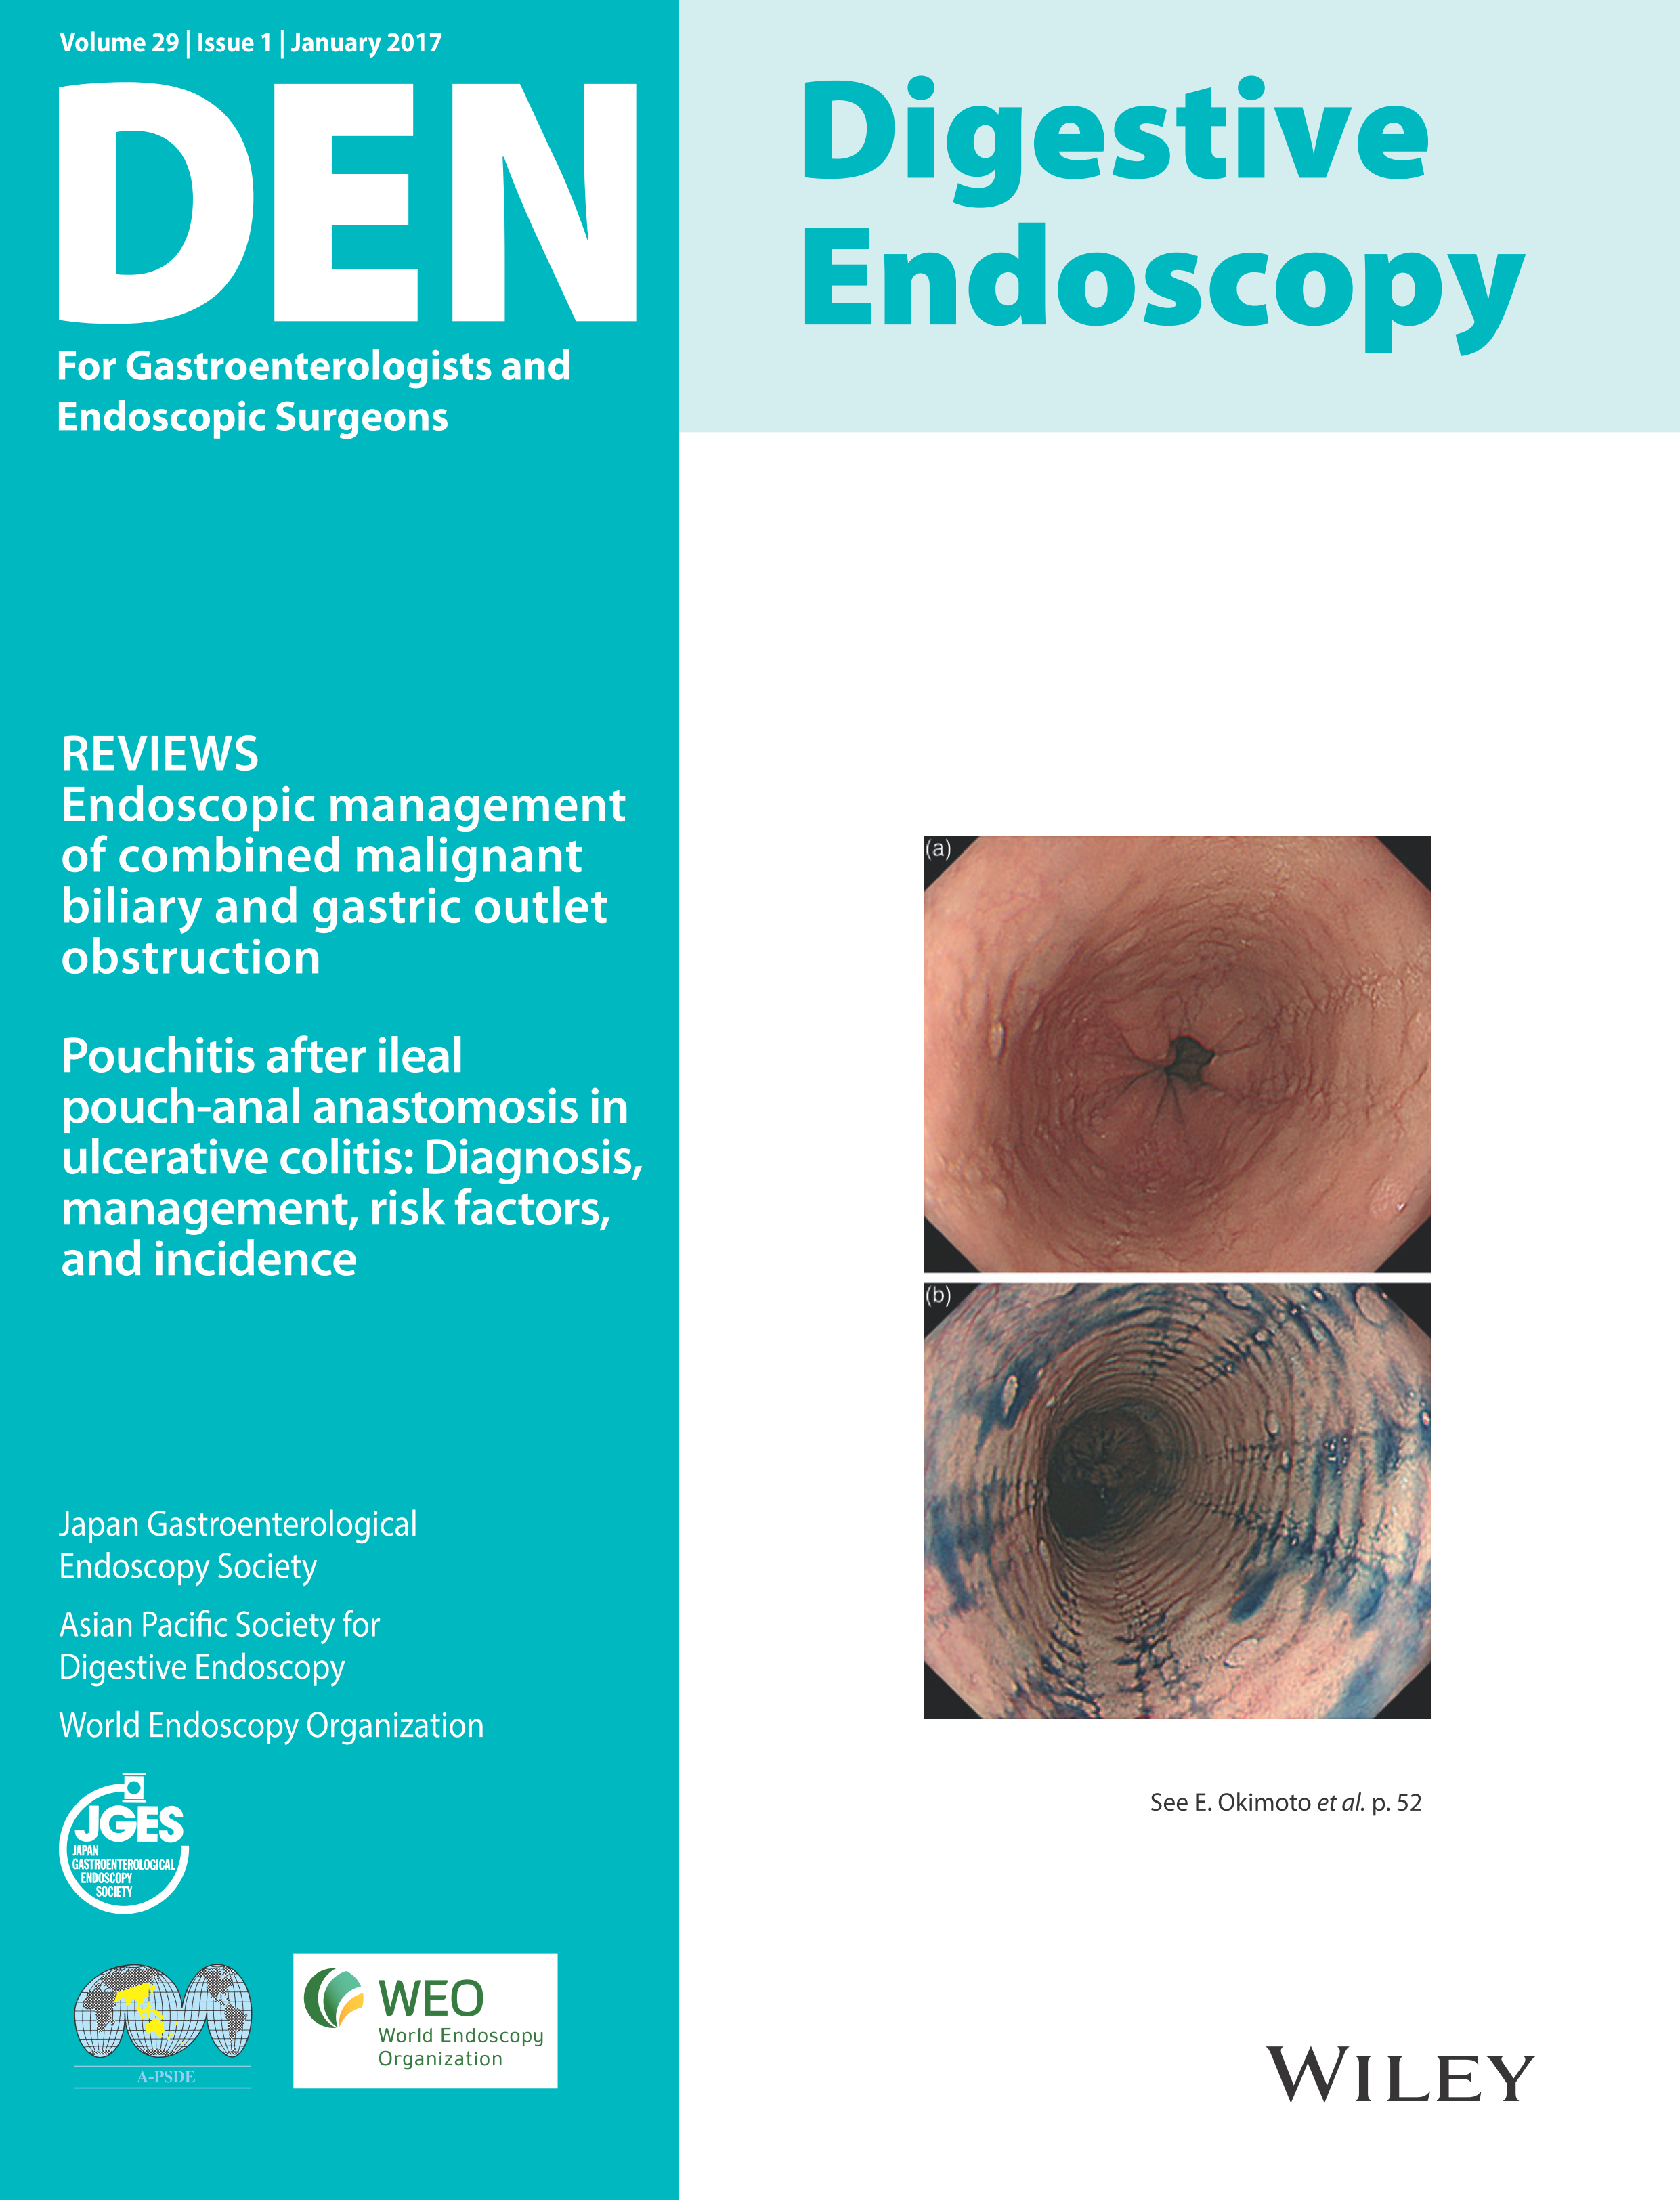 Digestive Endoscopy Vol29-1